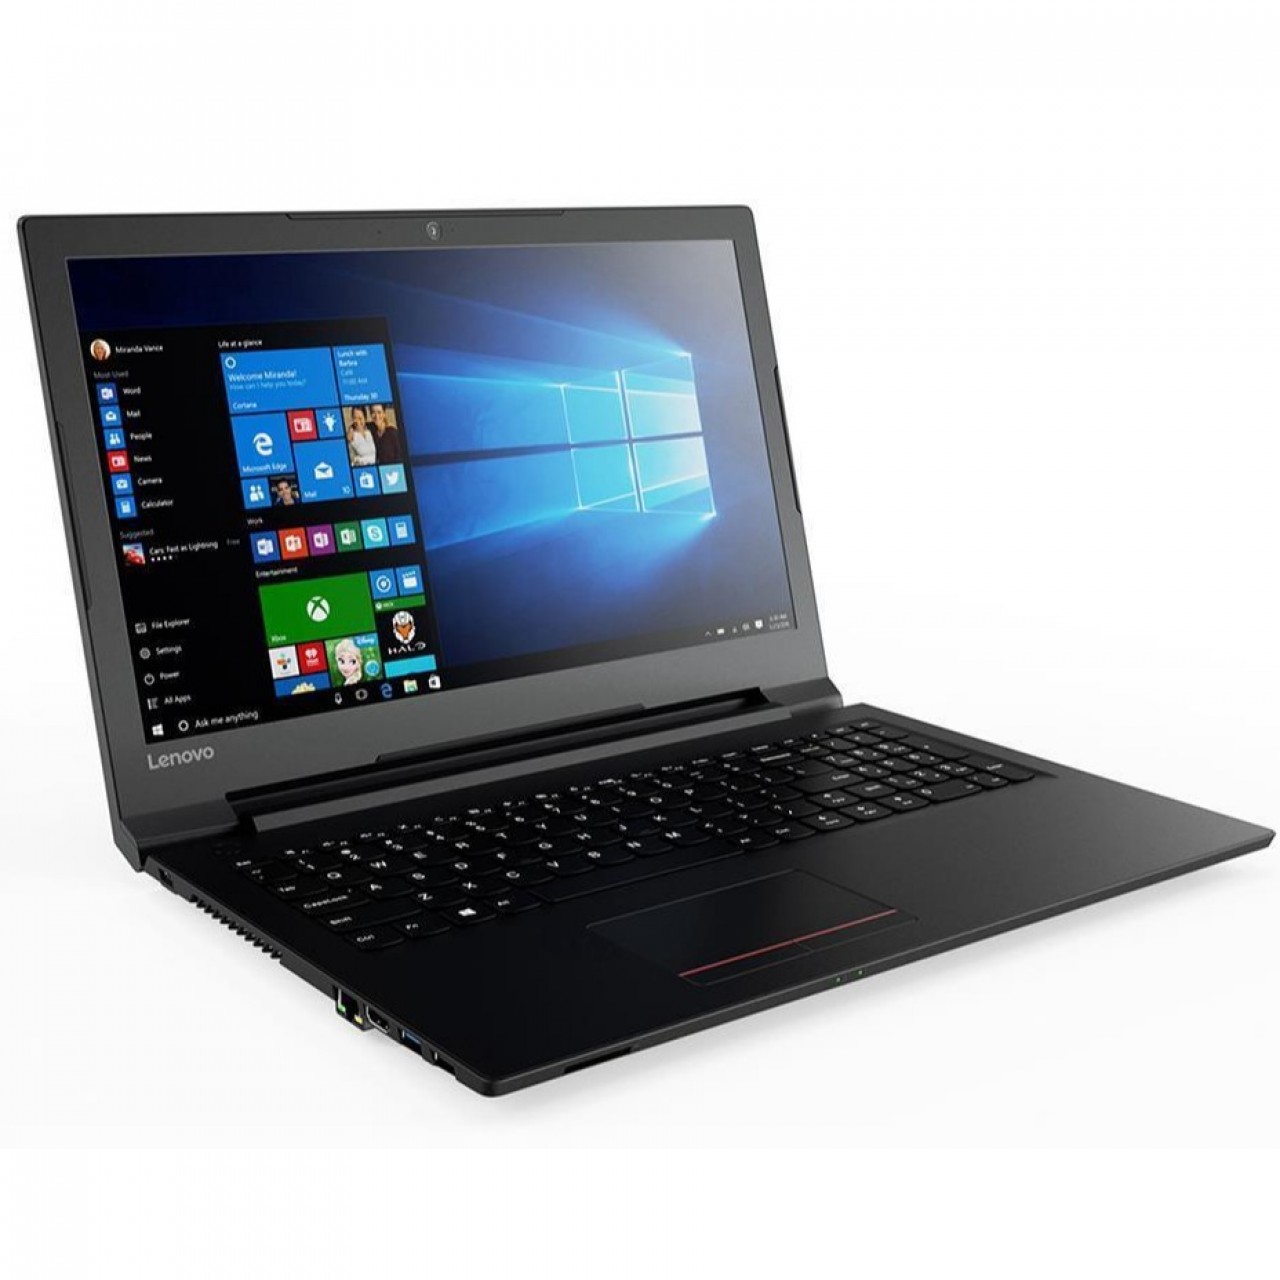 Lenovo Idea Pad V110 Laptop - 15.6 Inch Touch Display - 4 GB - Core i3 - 6th Generation